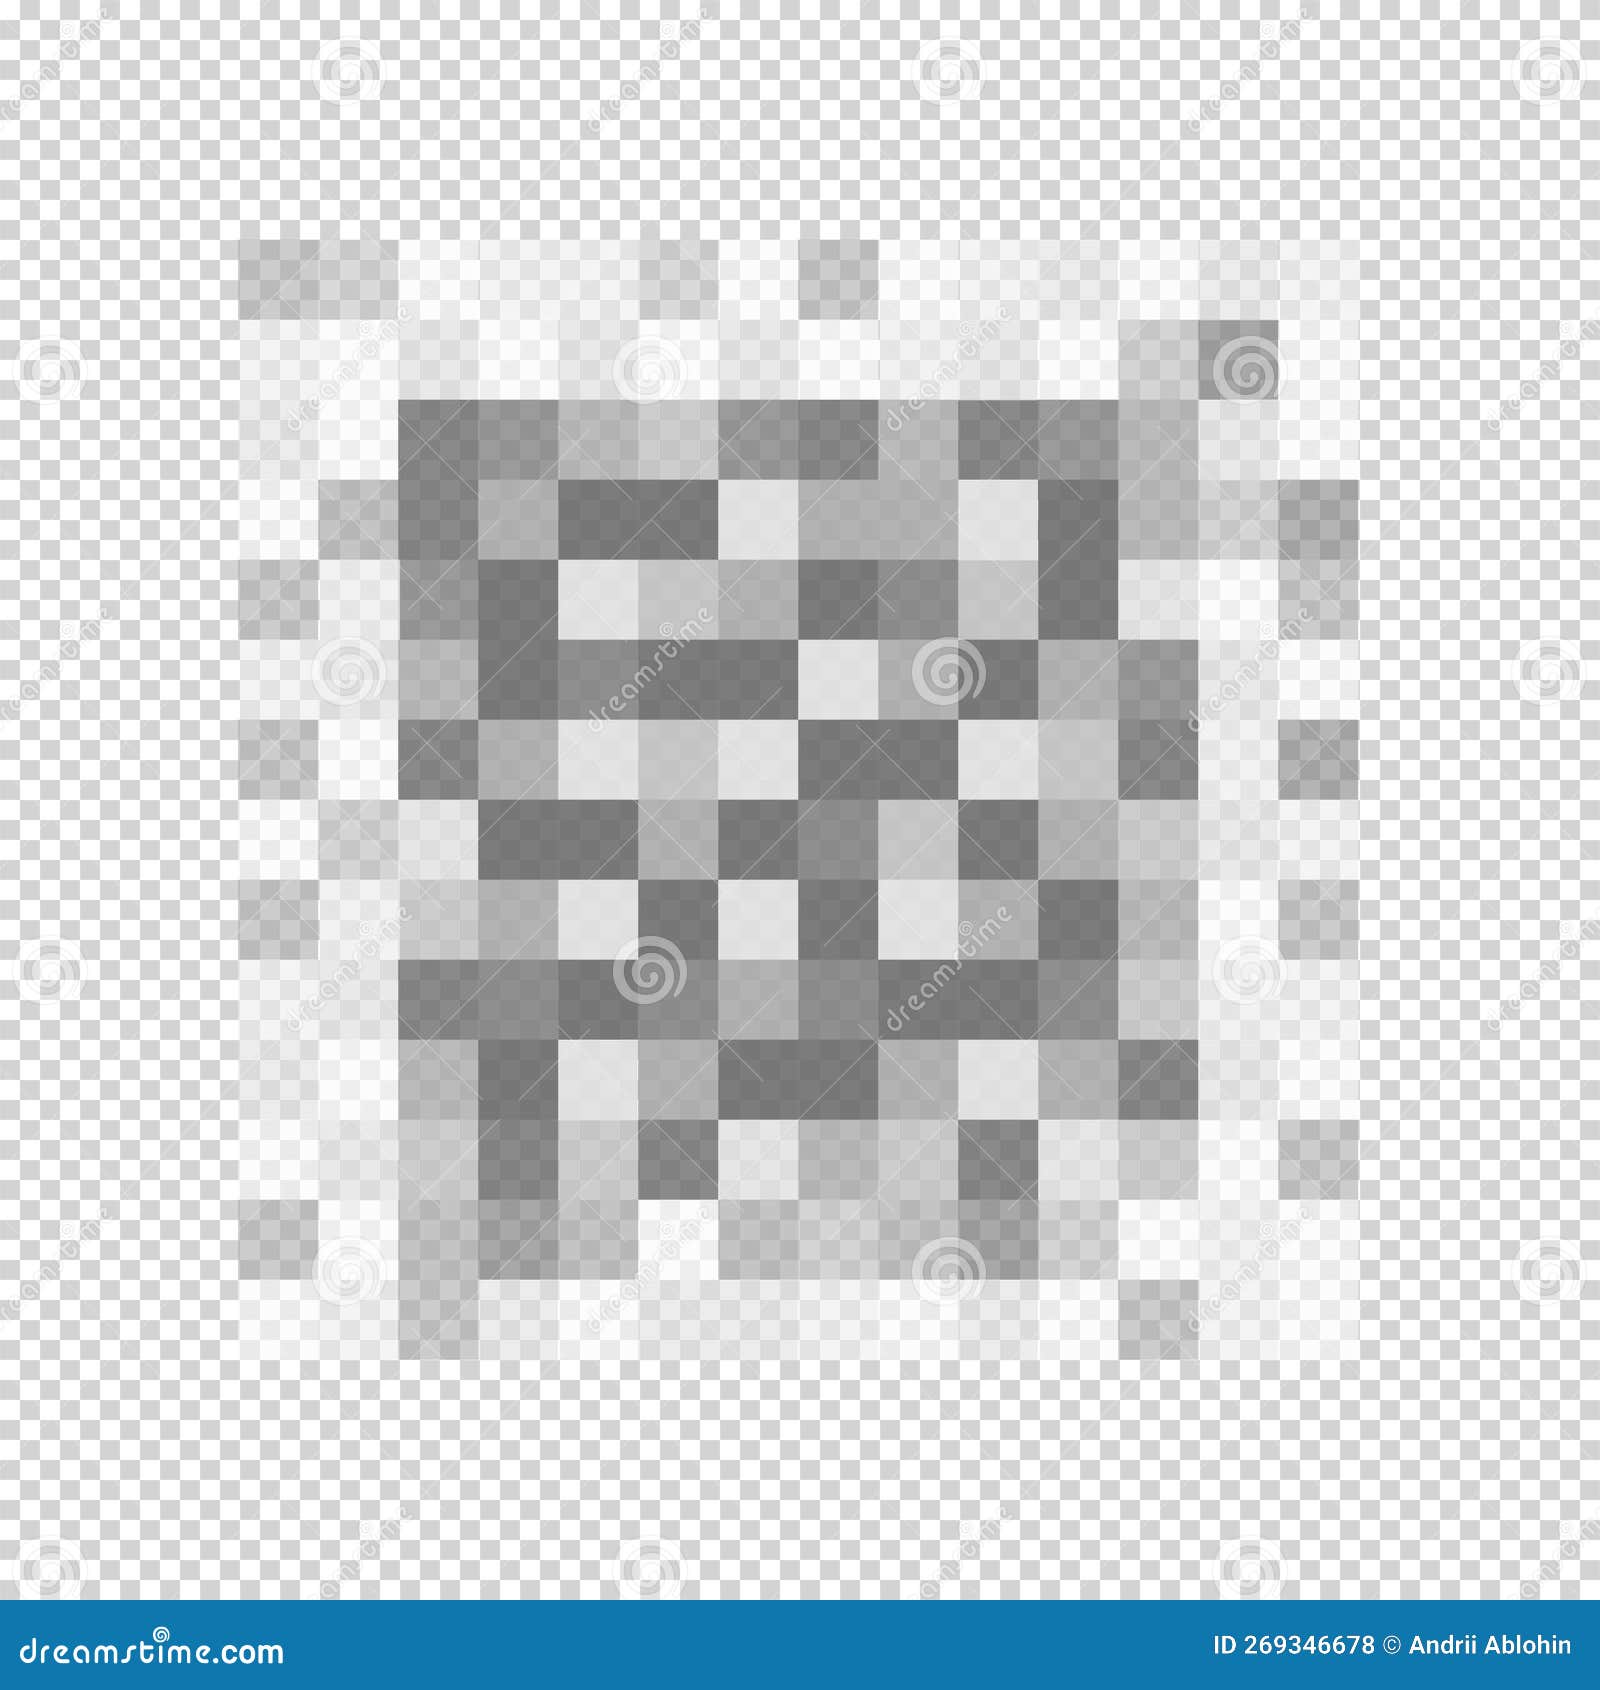 Censor blur effect on transparent background gray Vector Image